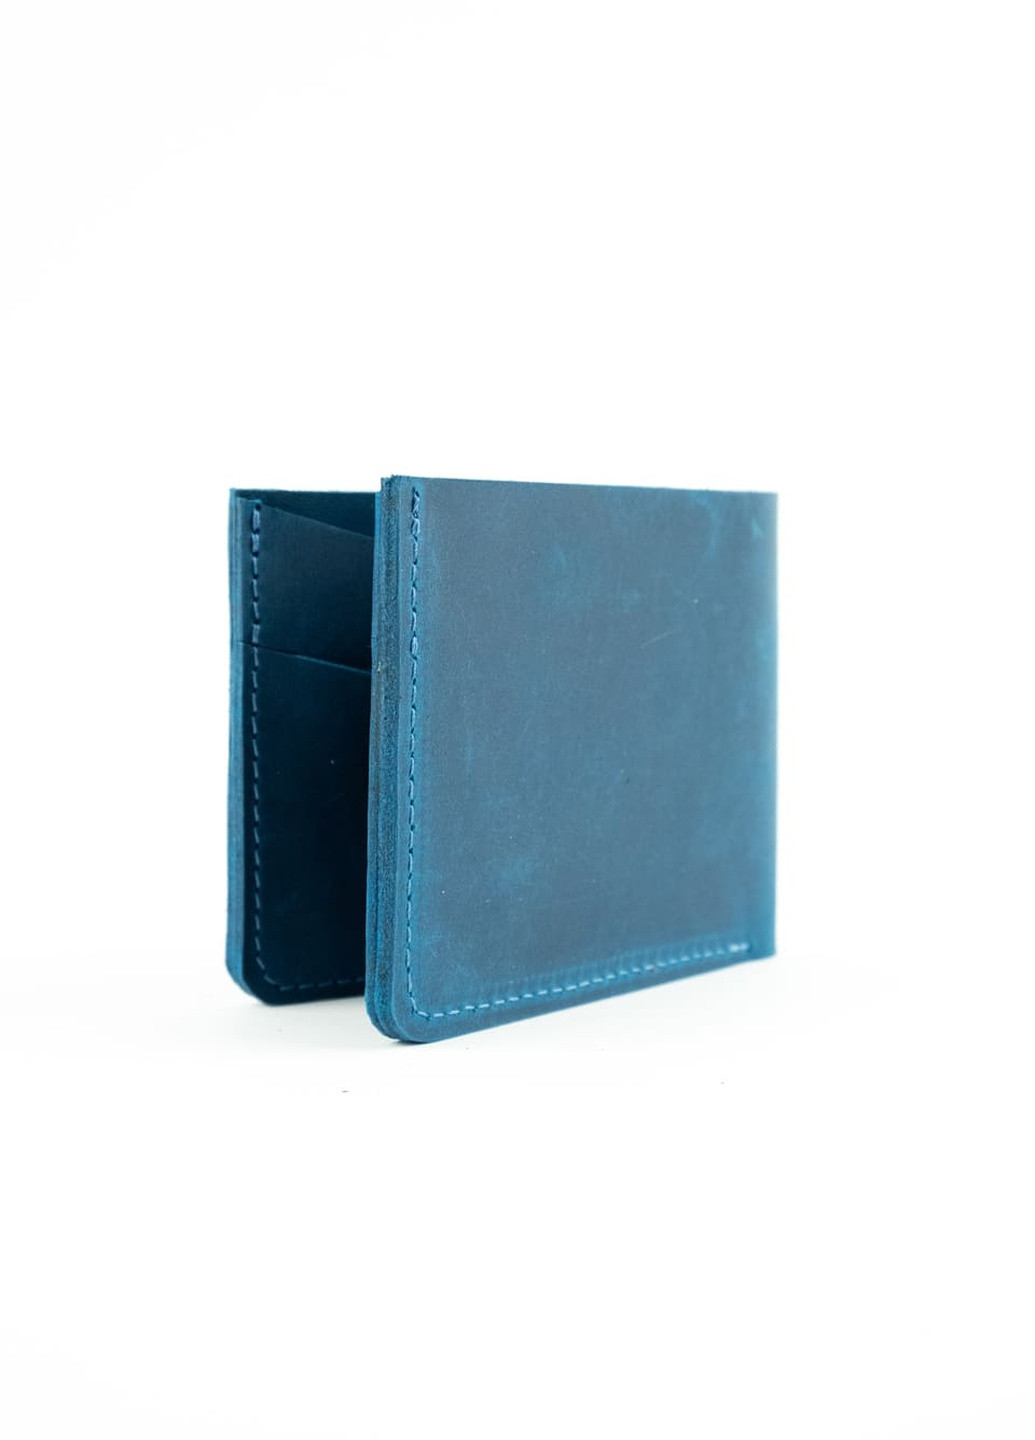 Кожаный бумажник кошелек бифолд Jet синий винтажный Kozhanty (252316665)